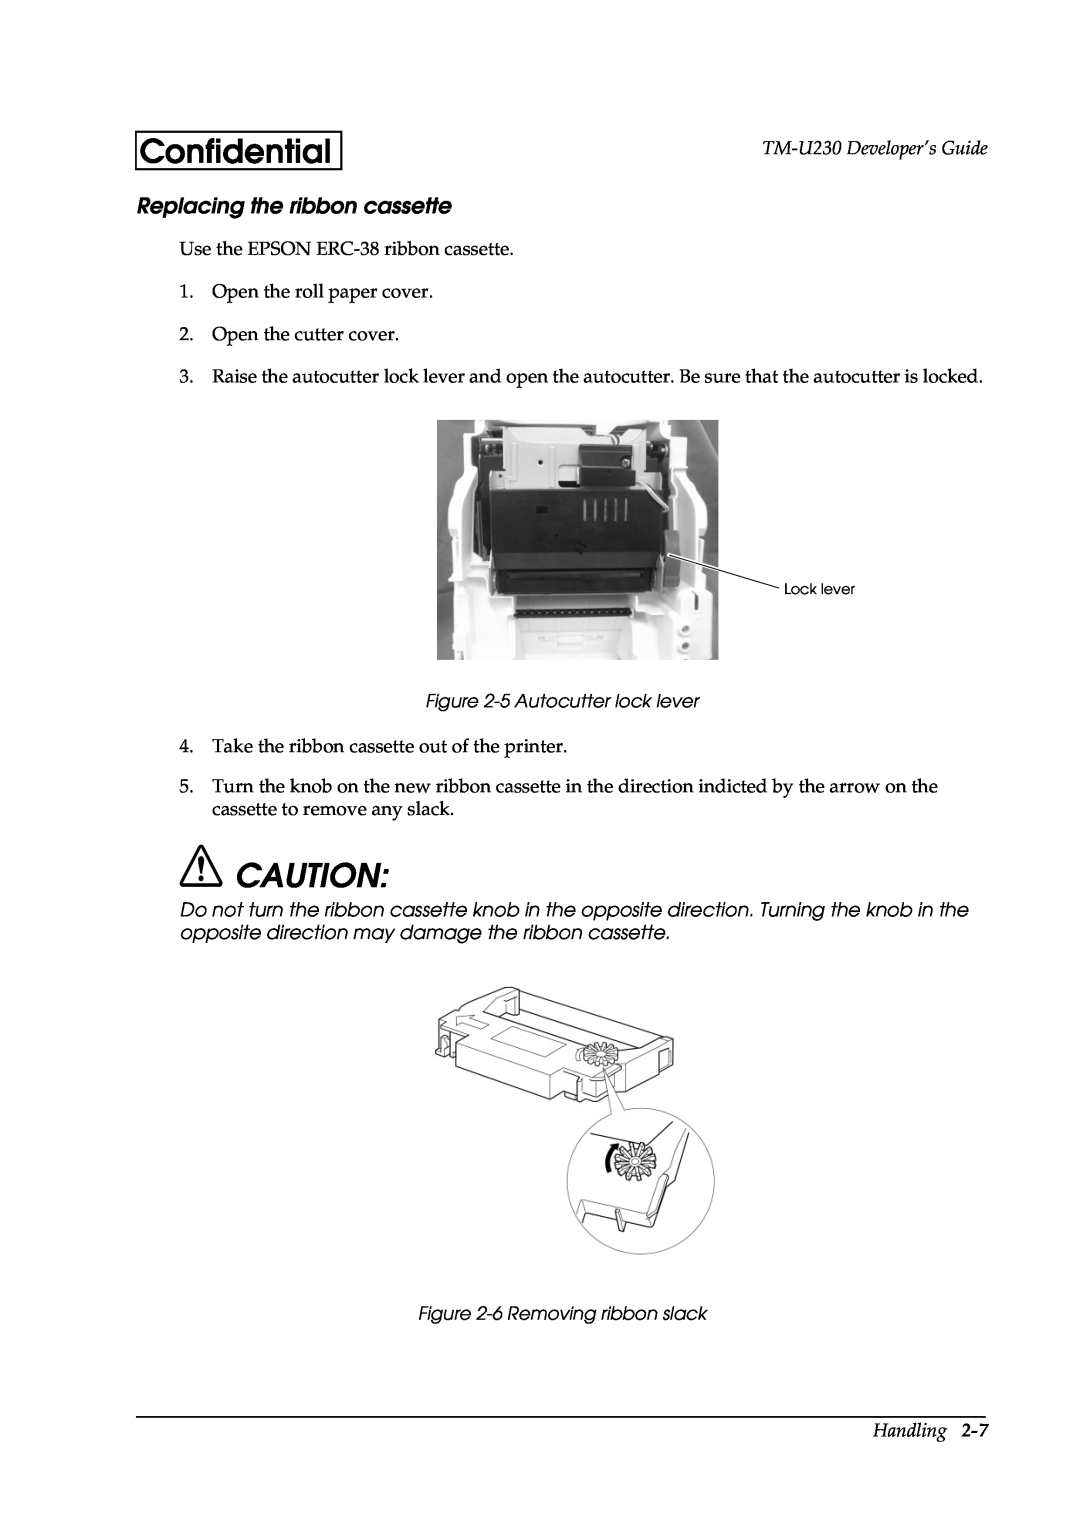 Epson manual Replacing the ribbon cassette, Confidential, TM-U230 Developer’s Guide, Handling 